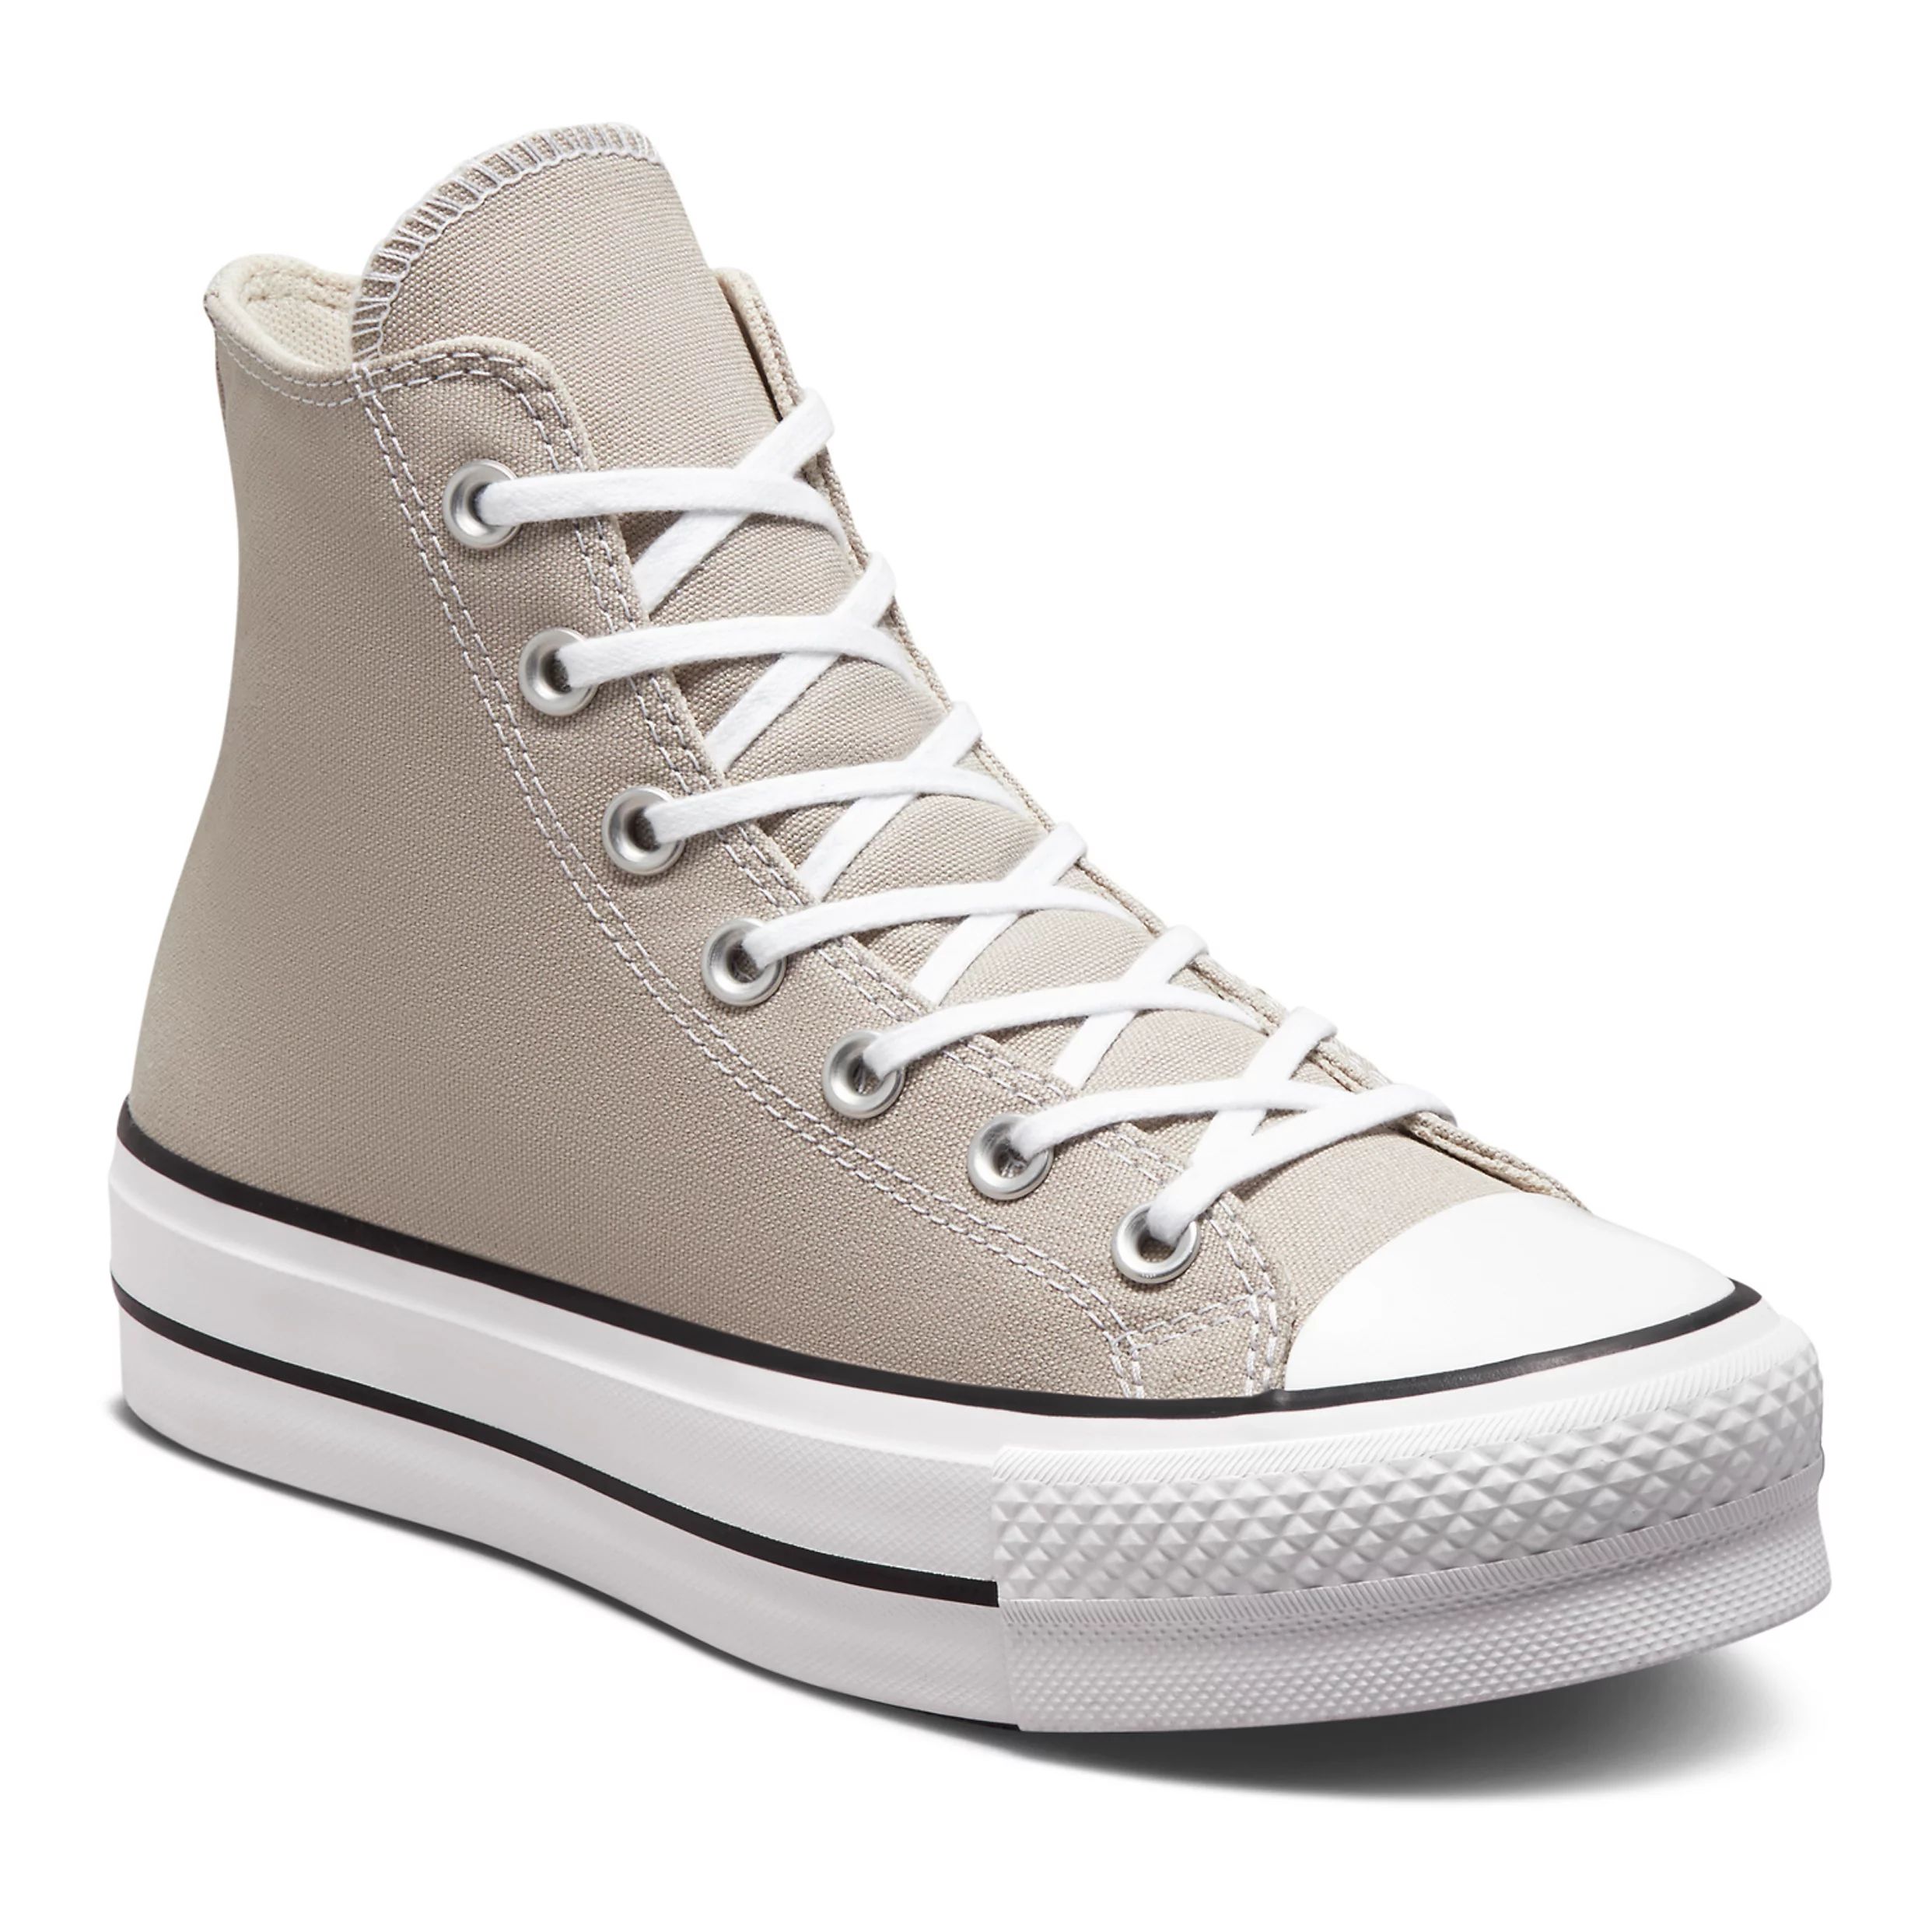 Converse Chuck Taylor All Star Lift Hi Women's Platform Sneakers | Kohl's